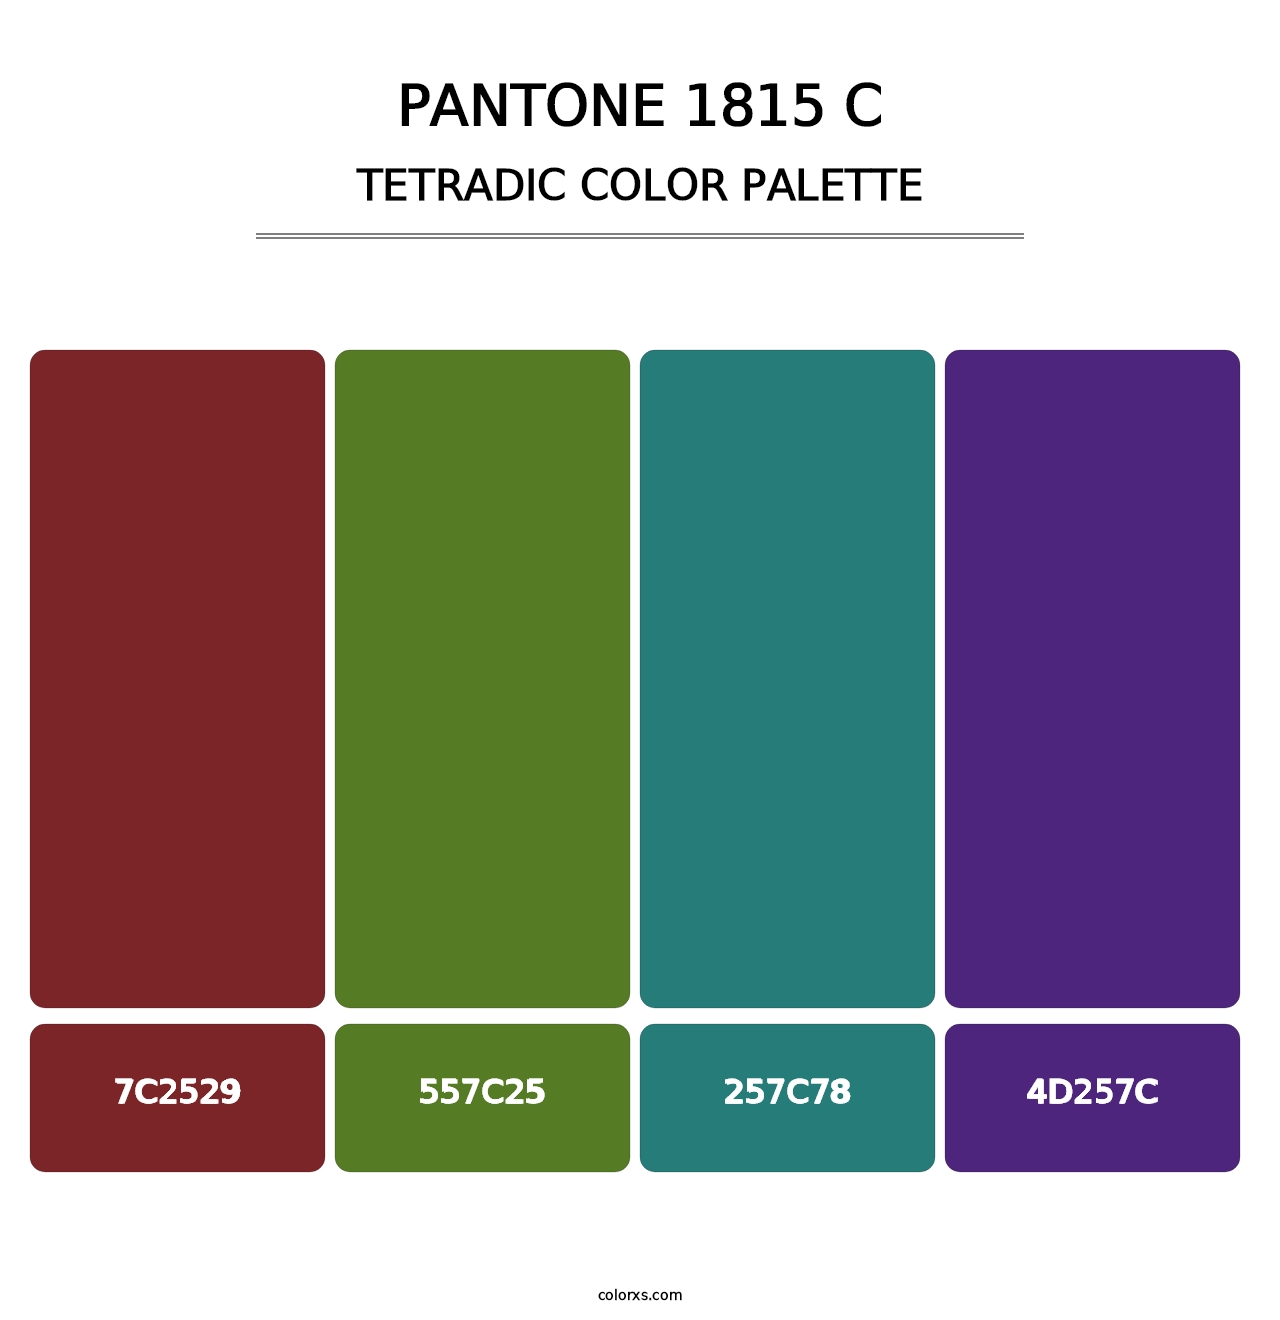 PANTONE 1815 C - Tetradic Color Palette